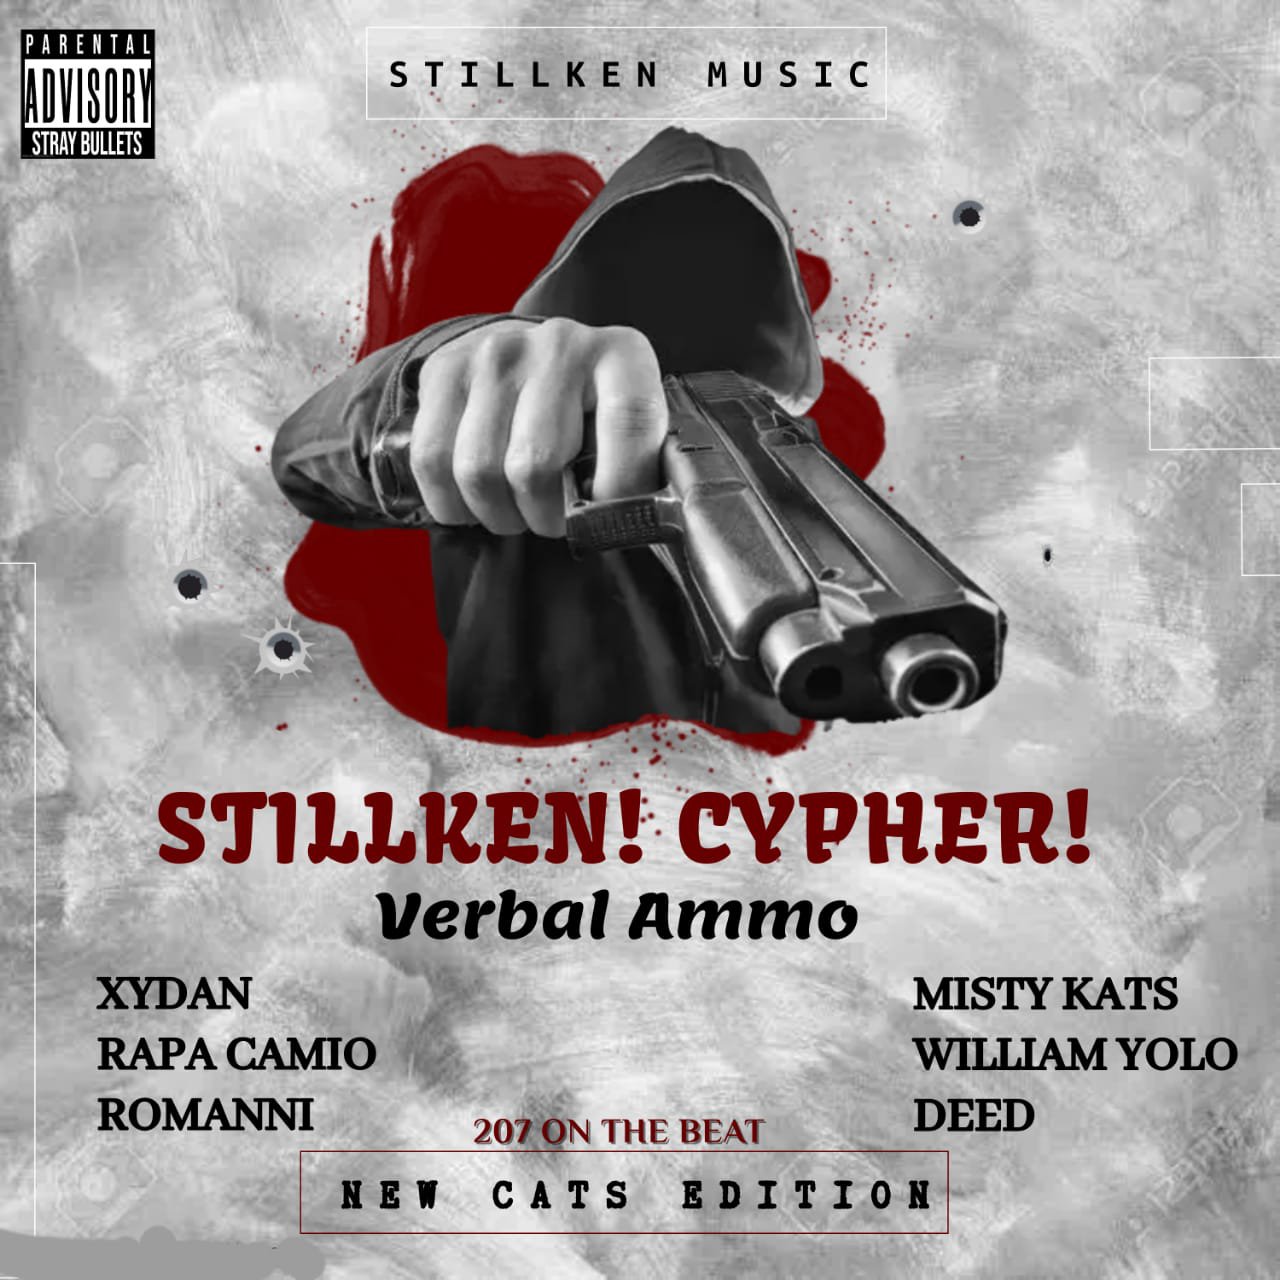 The “Stillken Cypher”  features Xydan, Rapa Camio, Romanni, Misty Kats, William YOLO and Deed